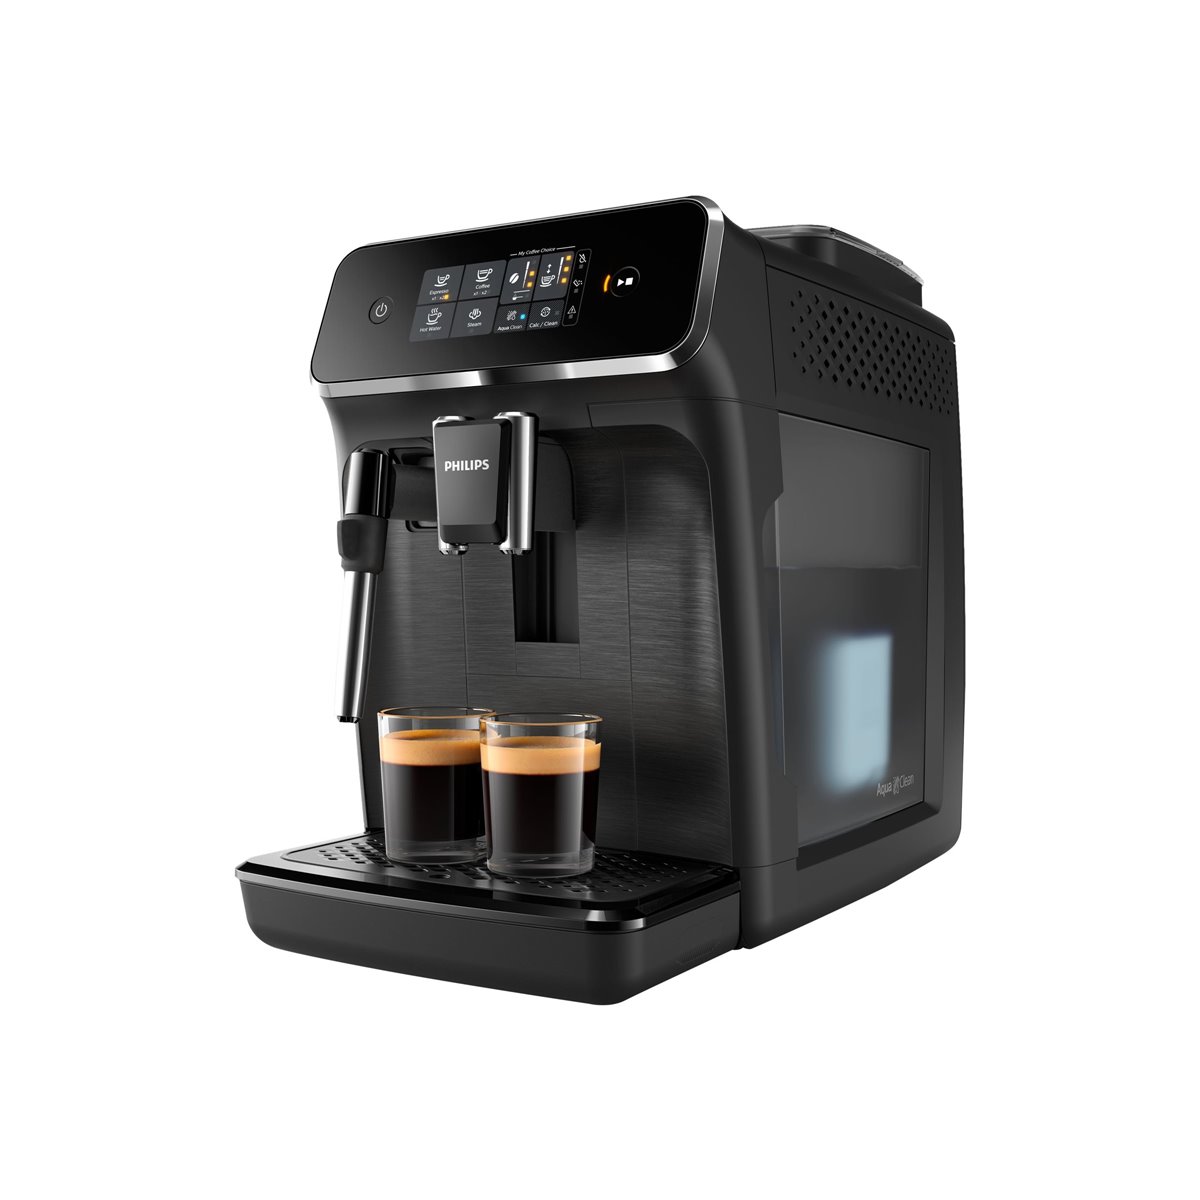 Philips 2200 series EP2220-10 - Espresso machine - 1.8 L - Coffee beans - Ground coffee - Built-in grinder - 1500 W - Black